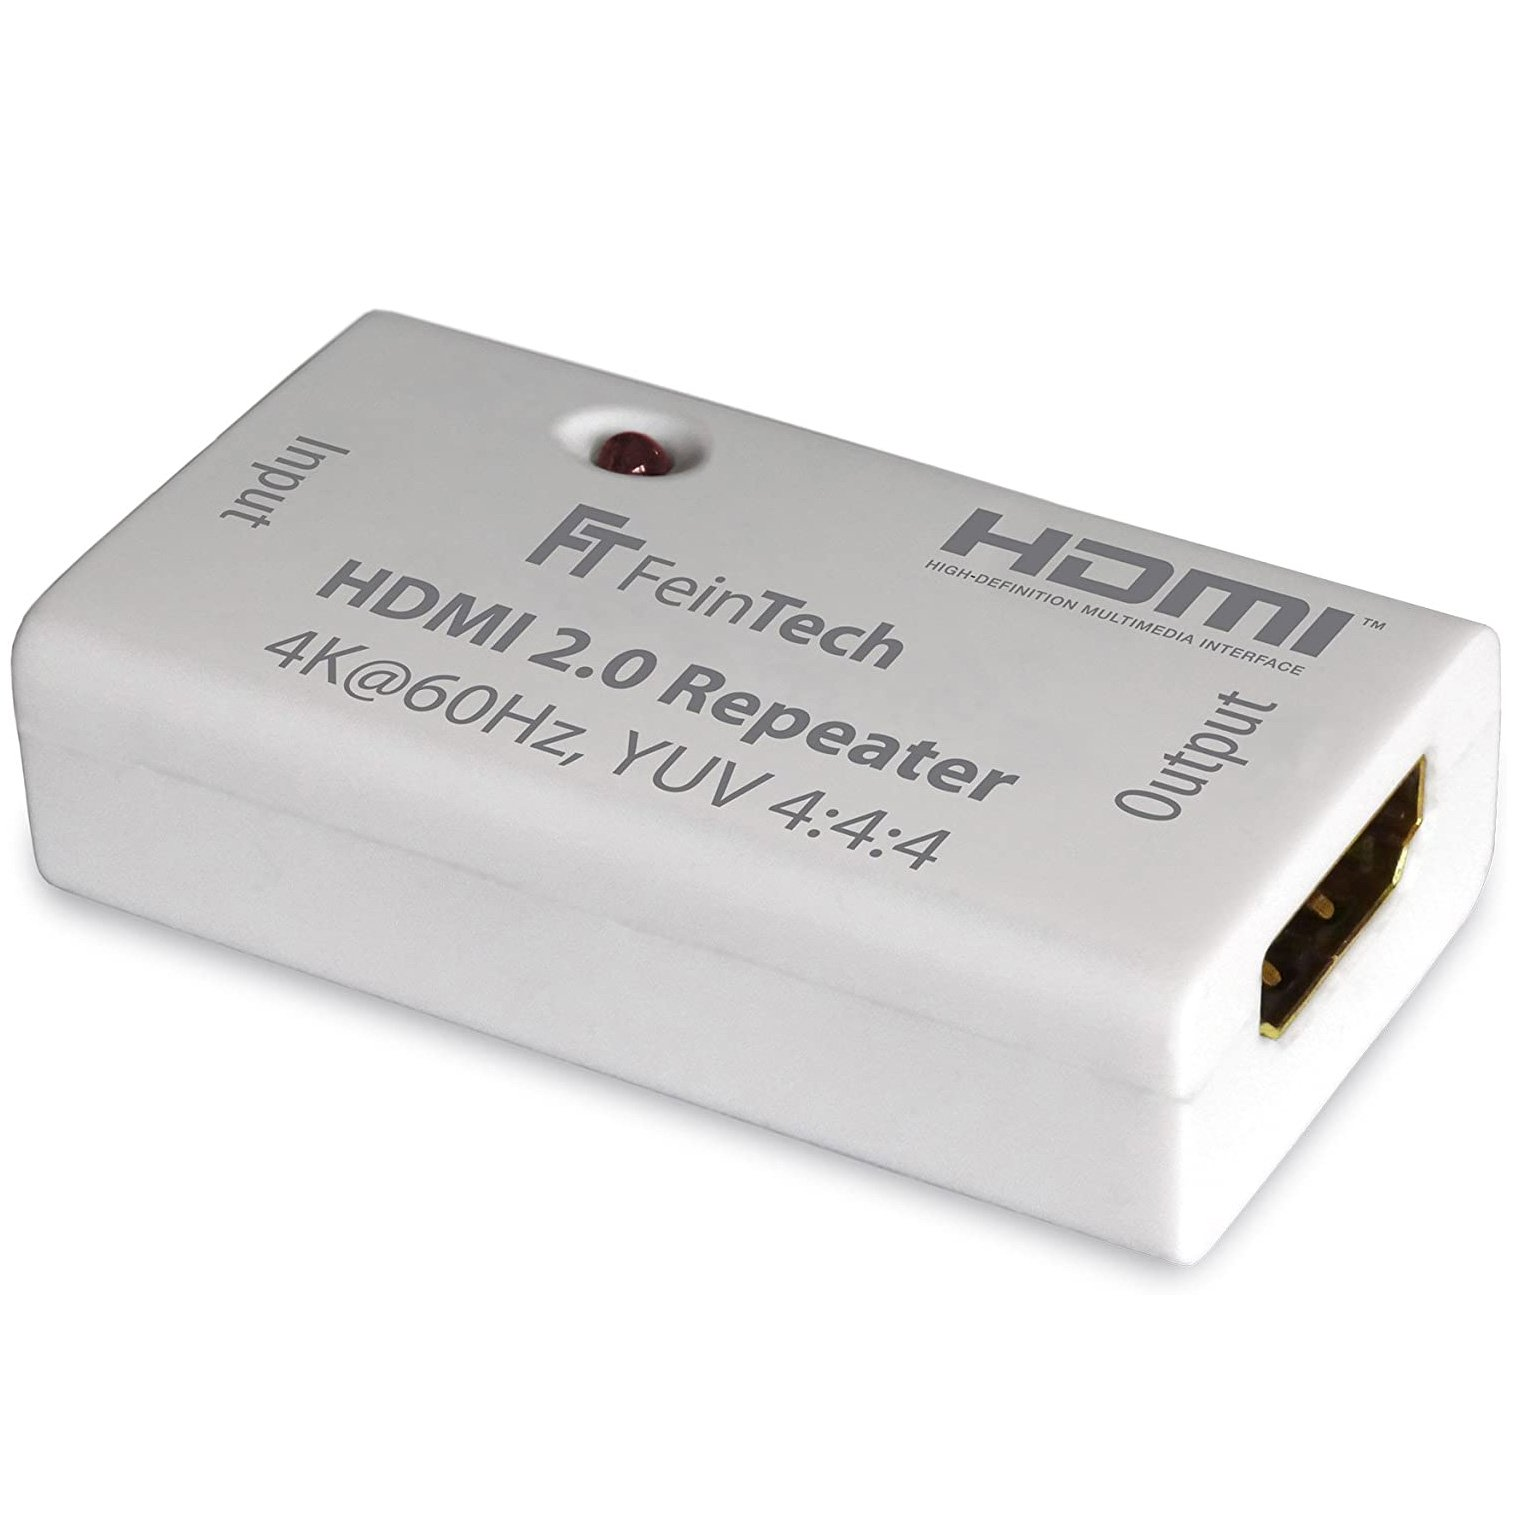 HDMI HDMI 2.0 4K FEINTECH VMR00100 Repeater Repeater 60Hz,